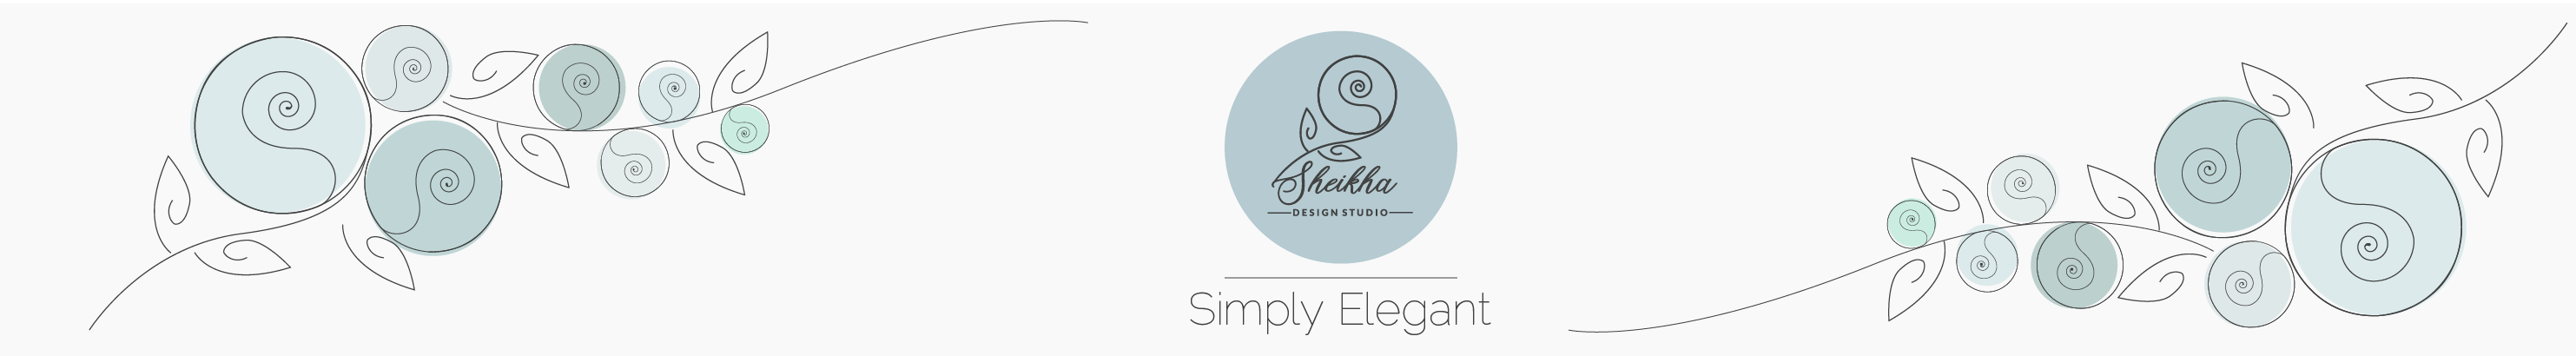 Sheikha Design's profile banner